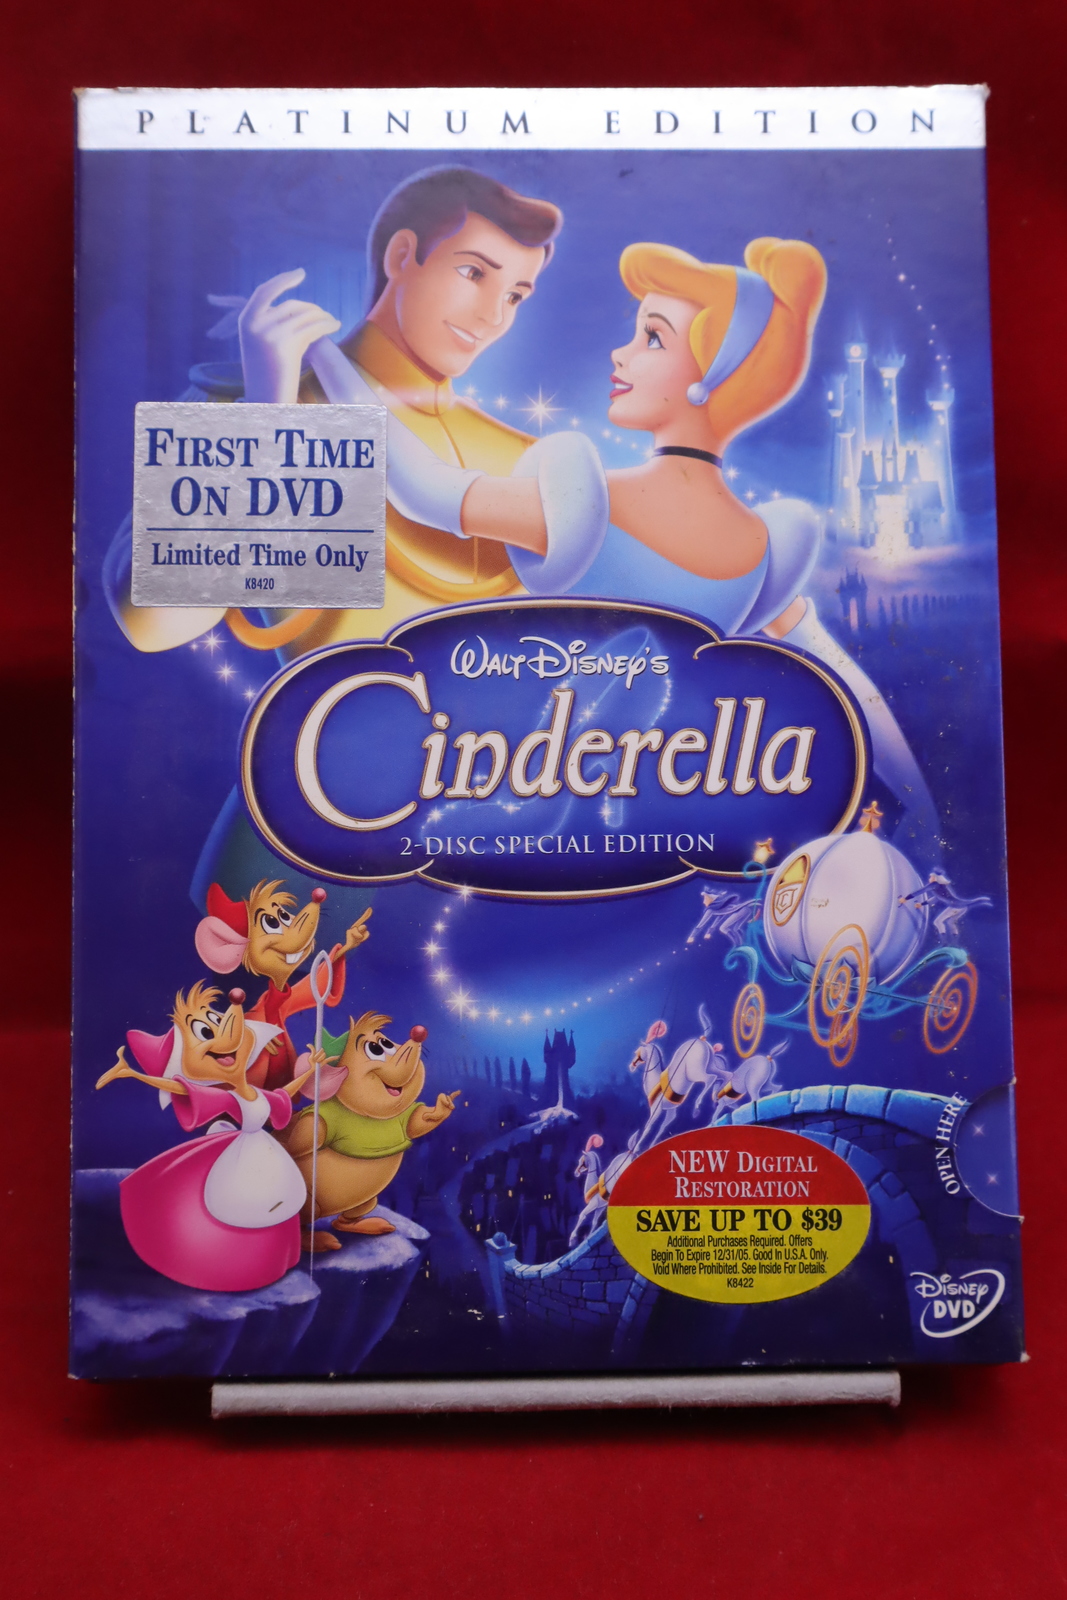 Primary image for Disney’s Cinderella Platinum Edition 2005 2-Disc Special Edition DVD Movie